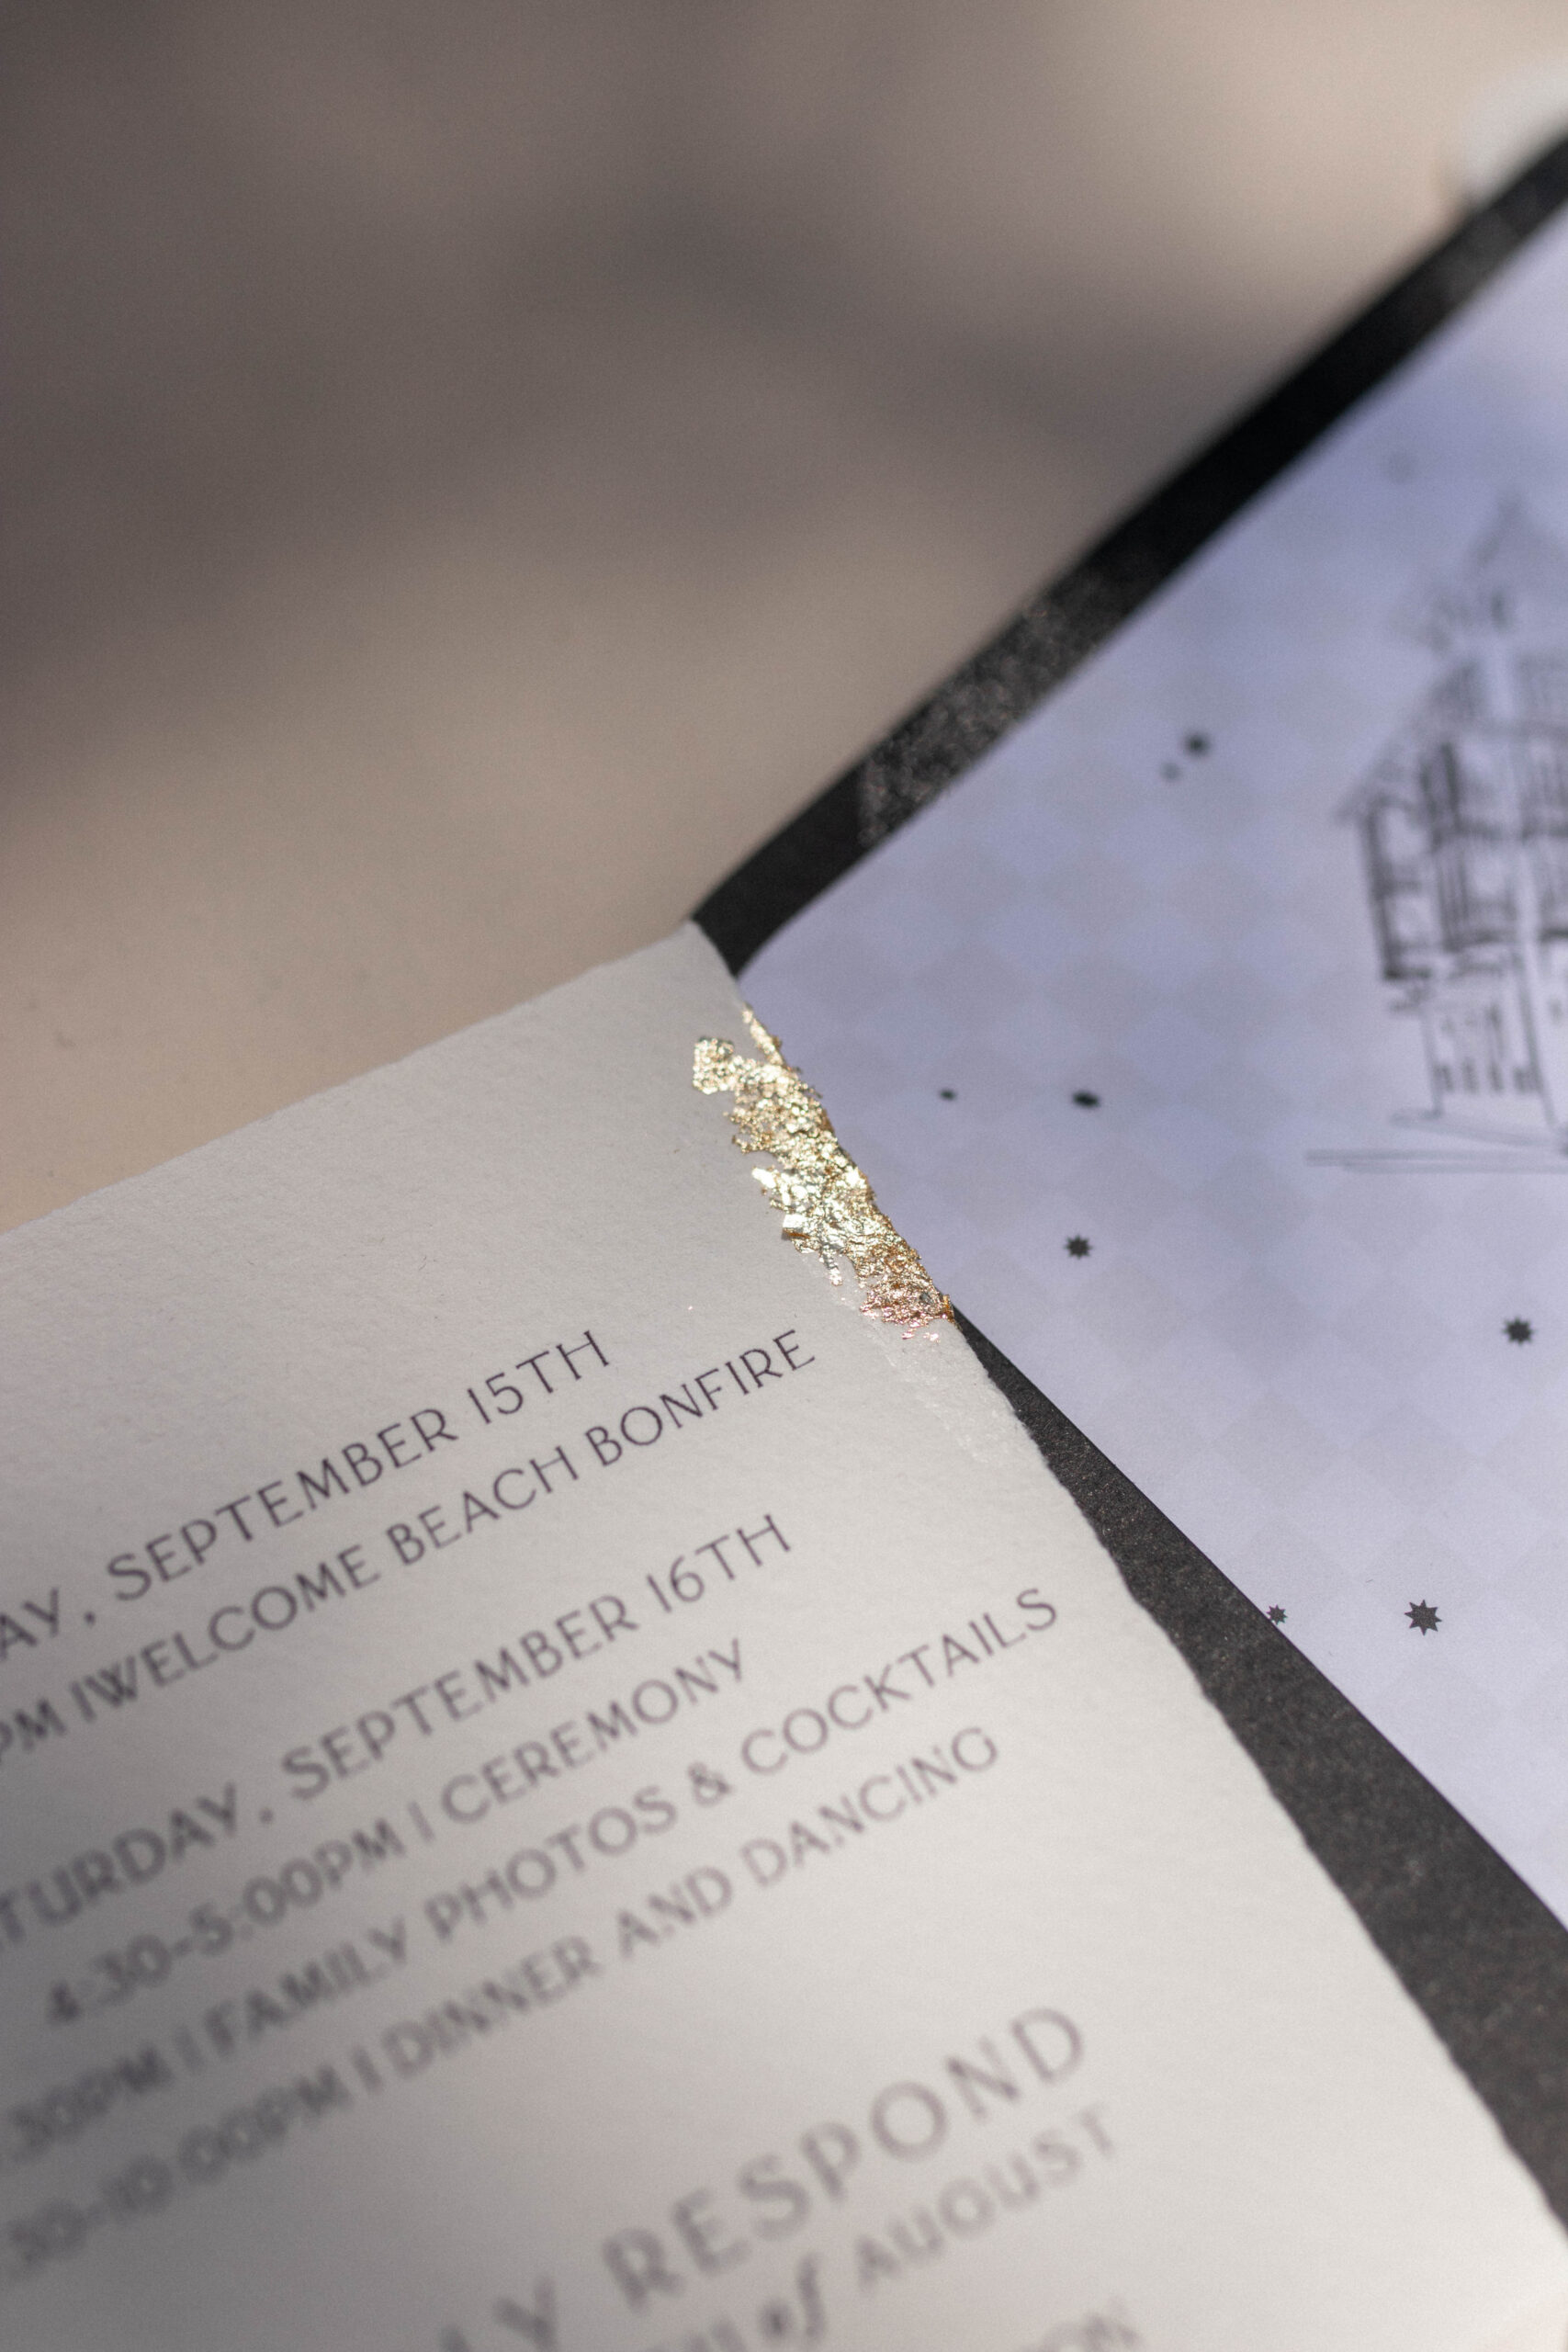 Deckled-edge paper and gold leaf wedding invitation